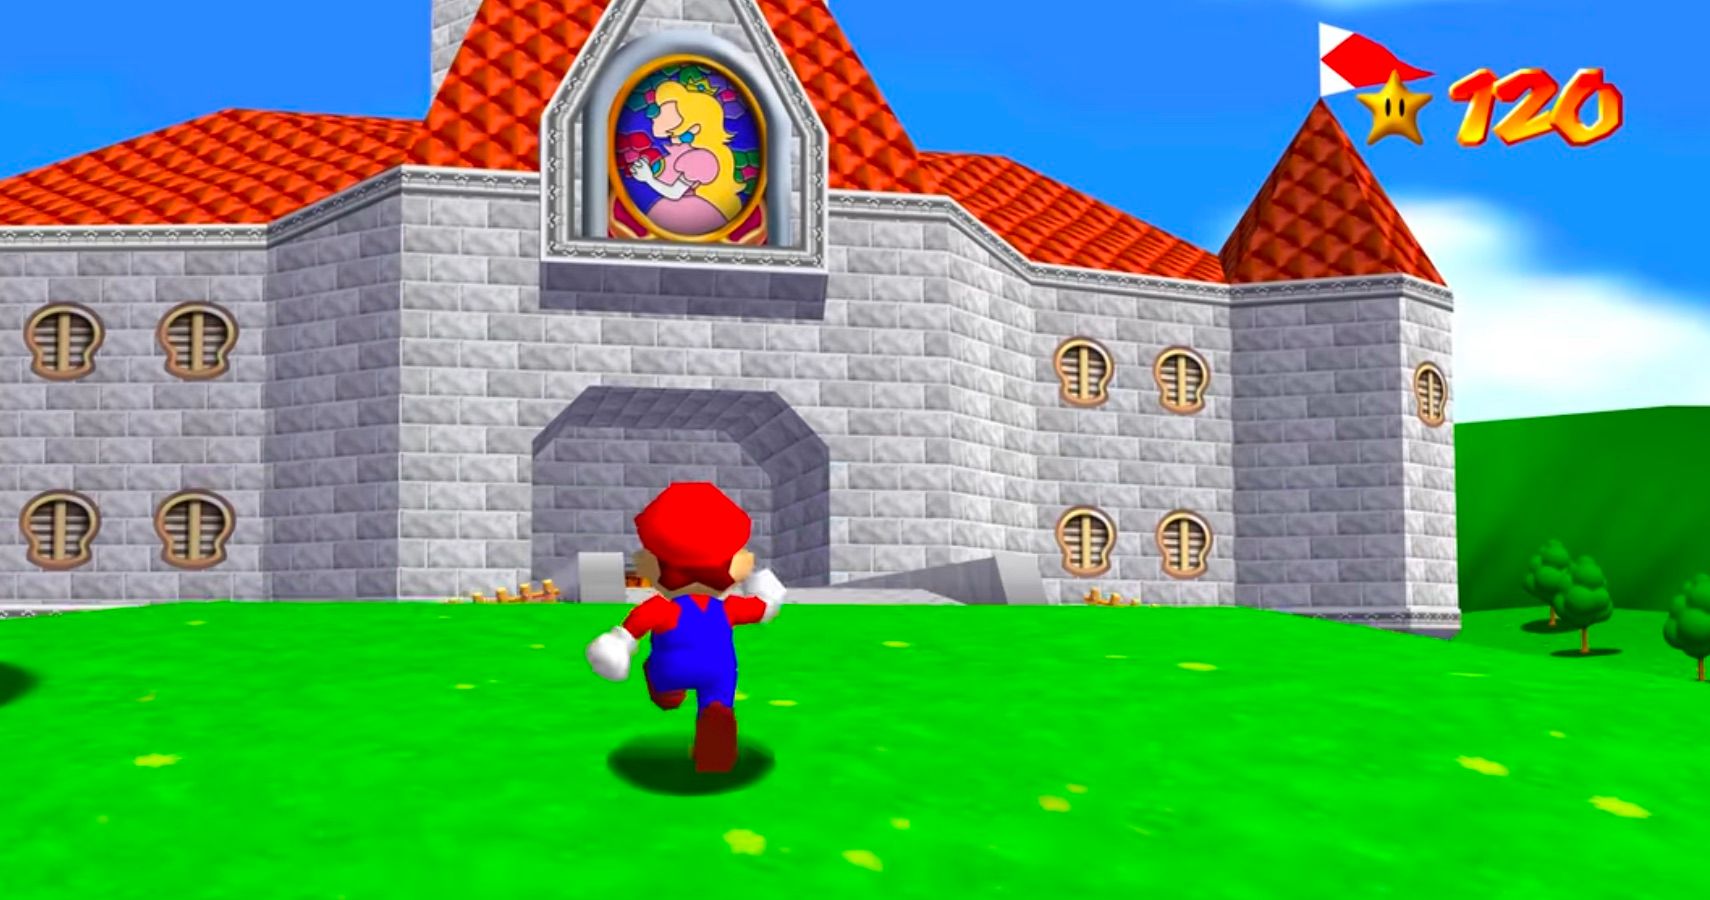 The Super Mario 64 Pc Port Is Getting Some Impressive Mods - roblox games like mario 64